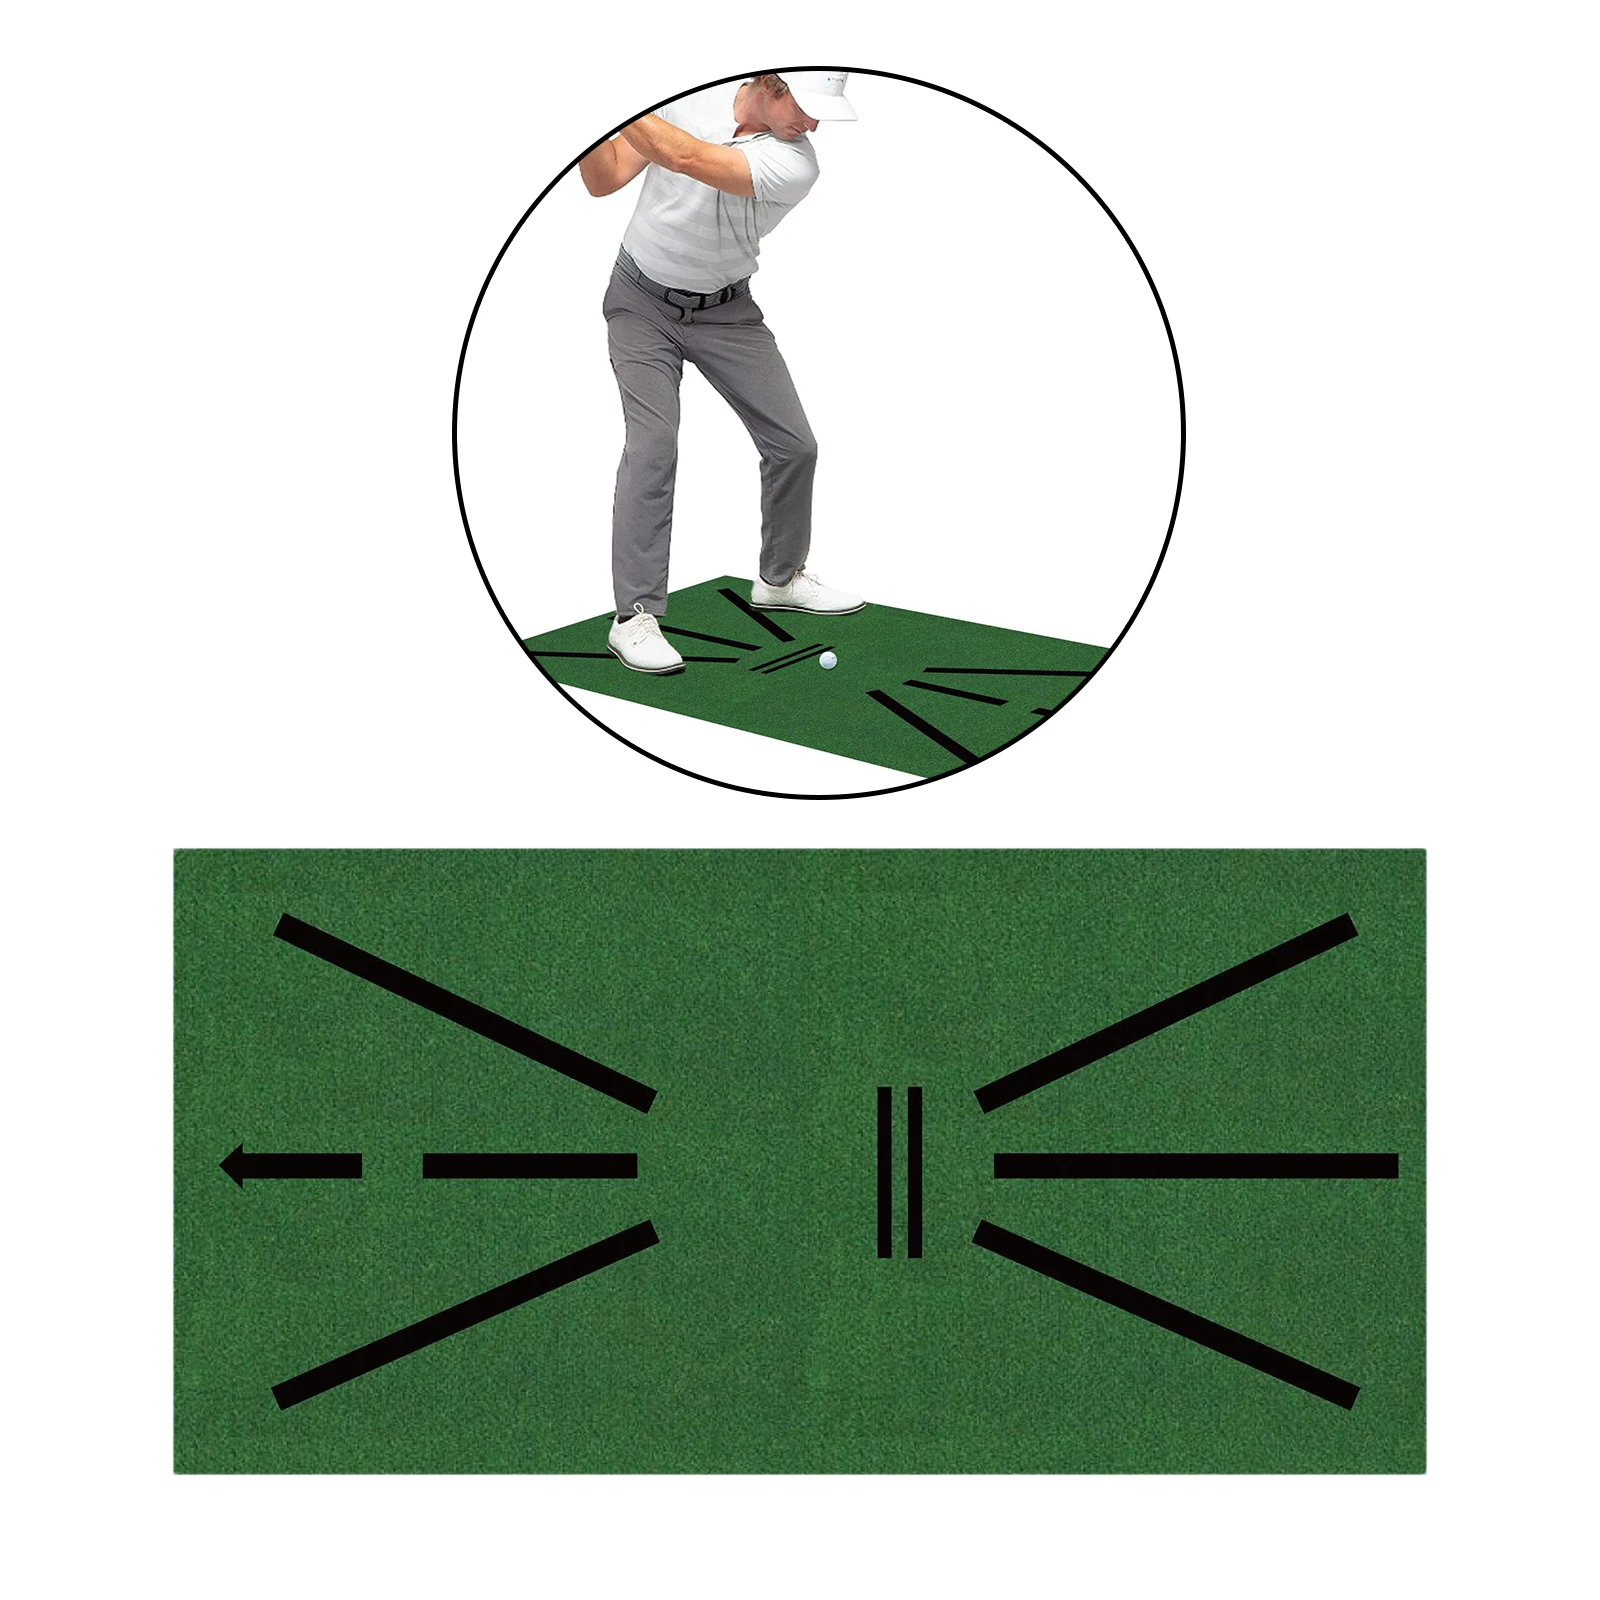 Premium Golf Mat 12x24 Residential Practice Target Aids Pad for Indoor & Outdoor Backyard Kids Adults